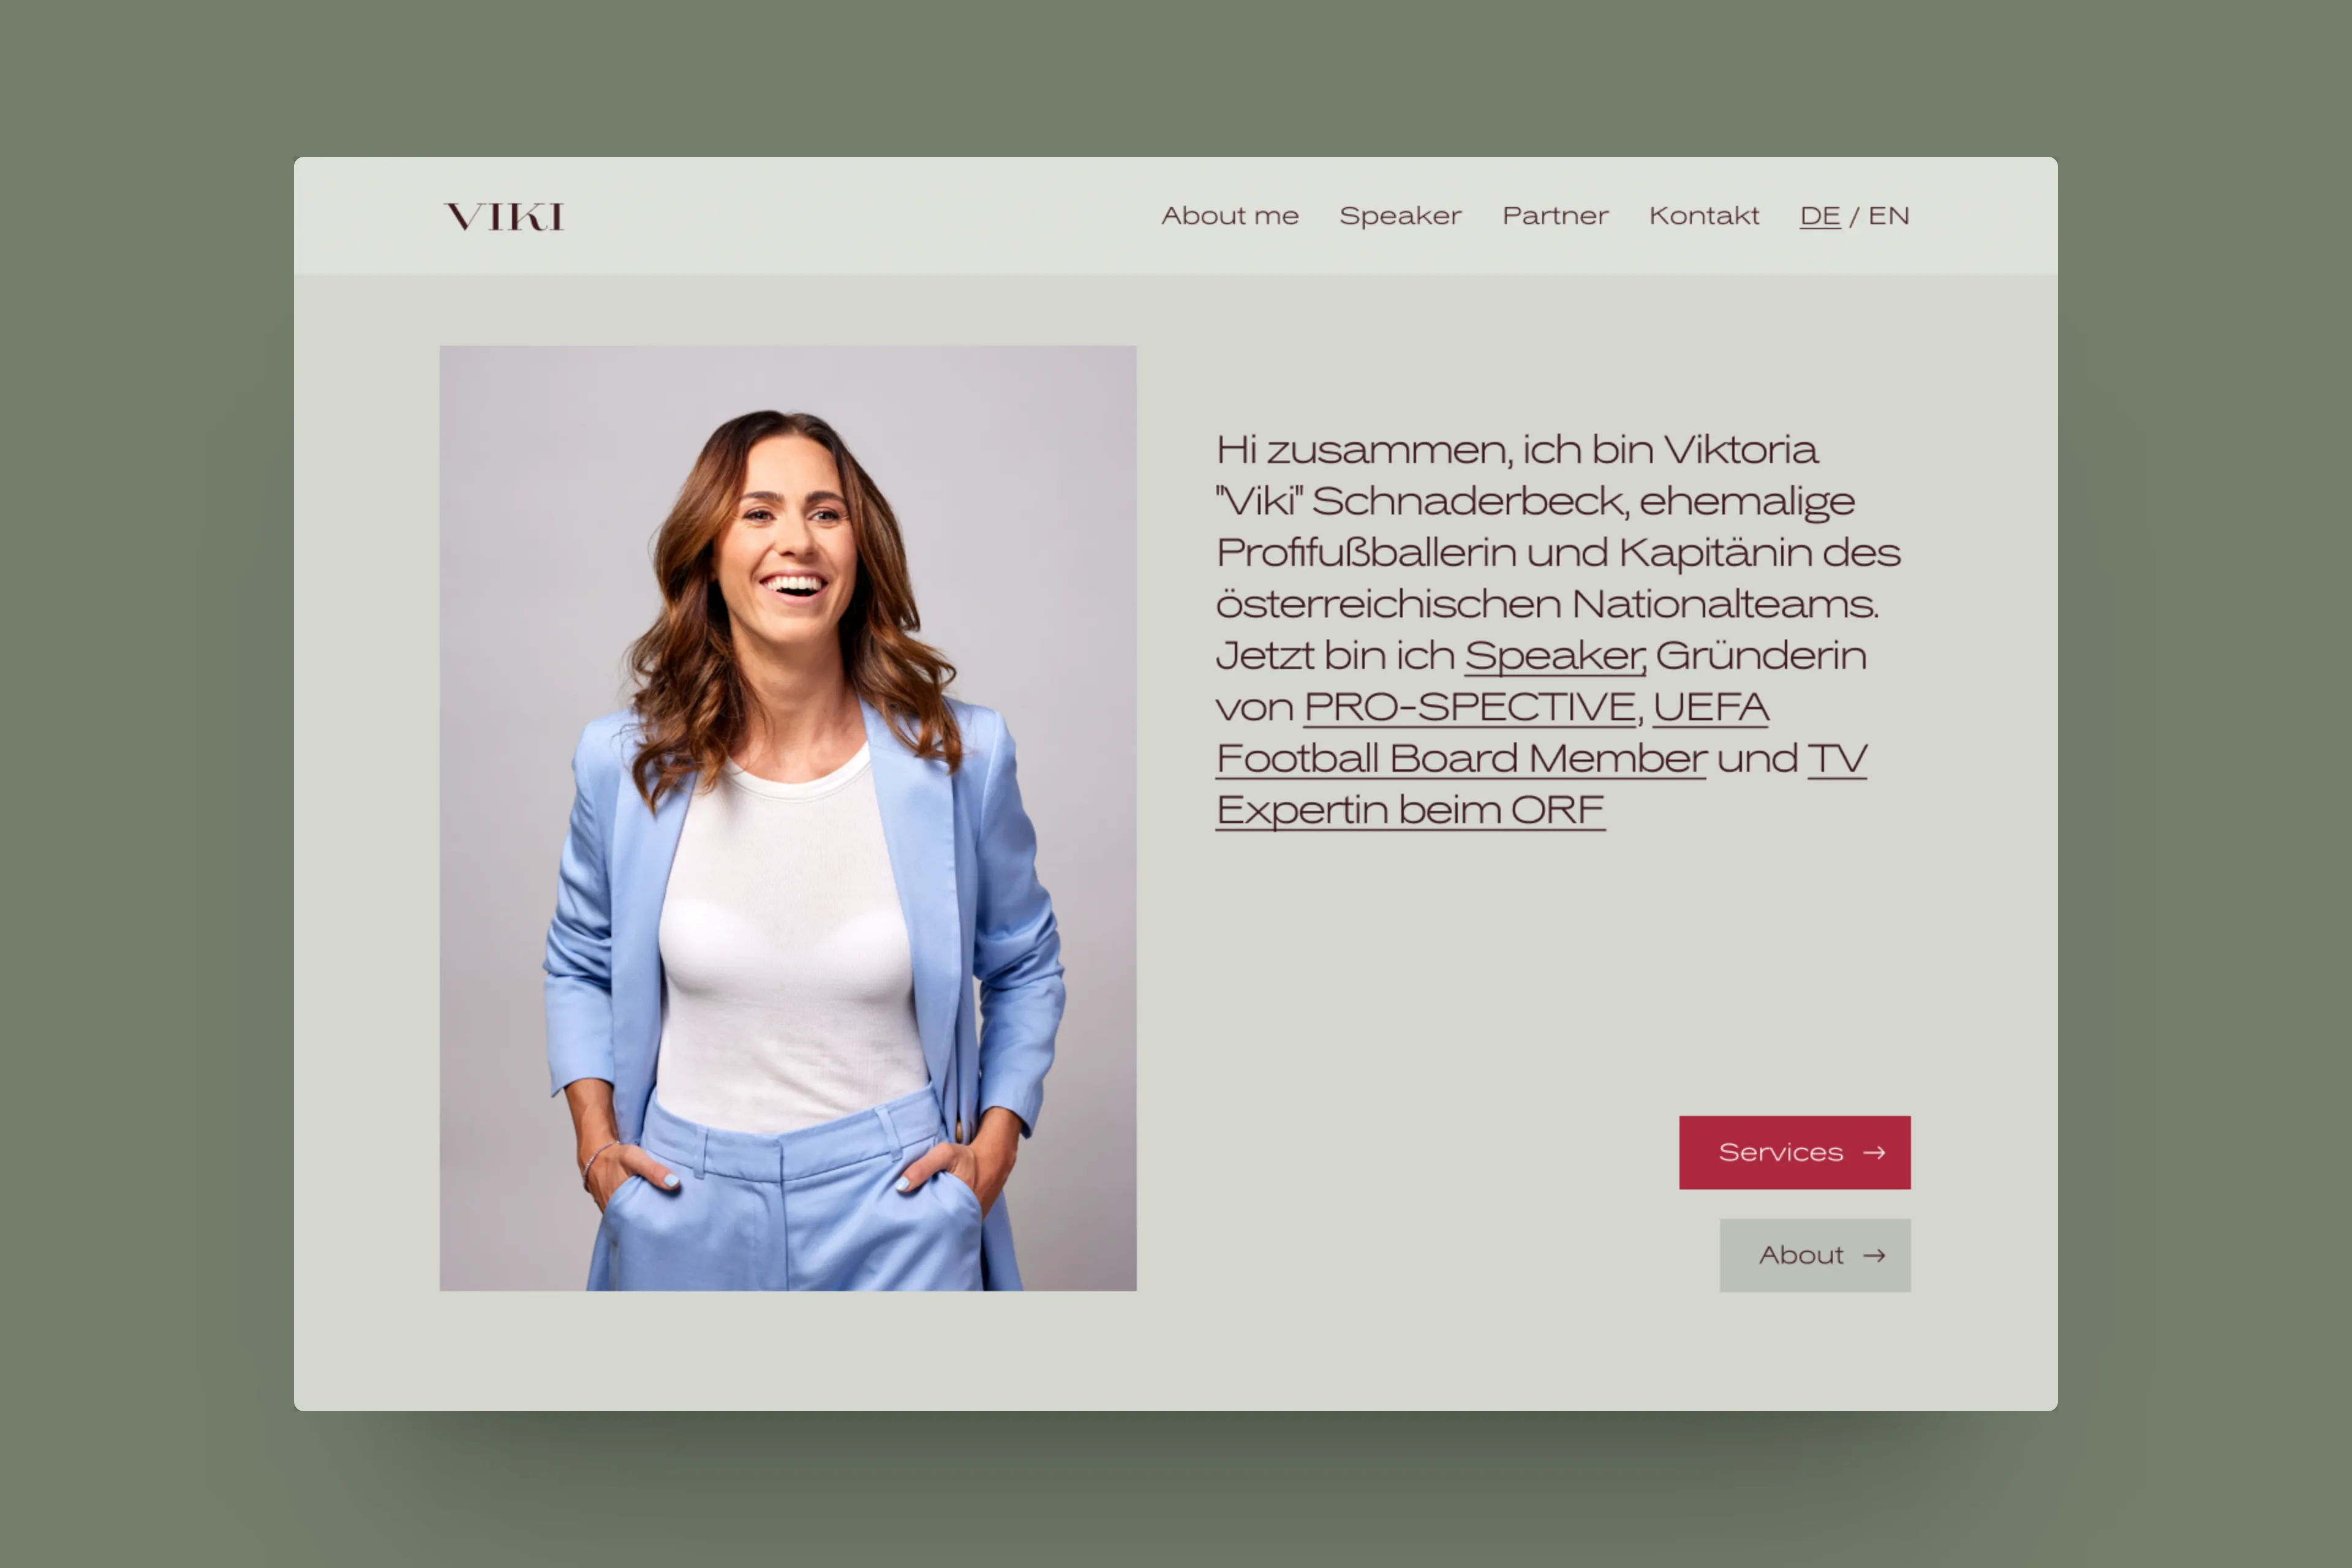 A website mockup for Viktoria Schnaderbeck's website